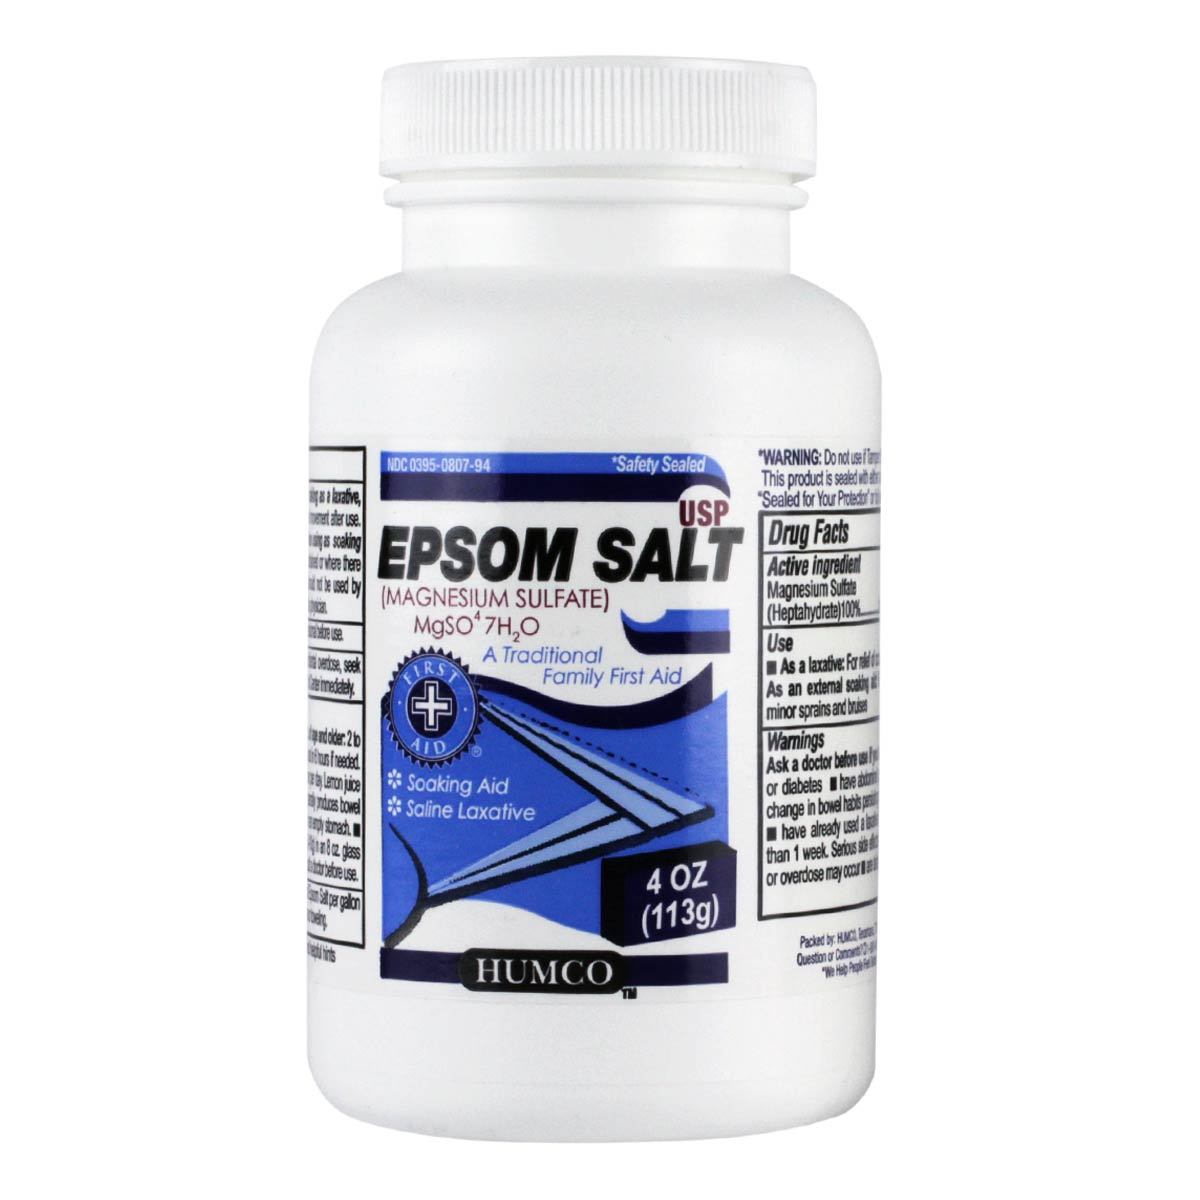 Primary image of Epsom Salt